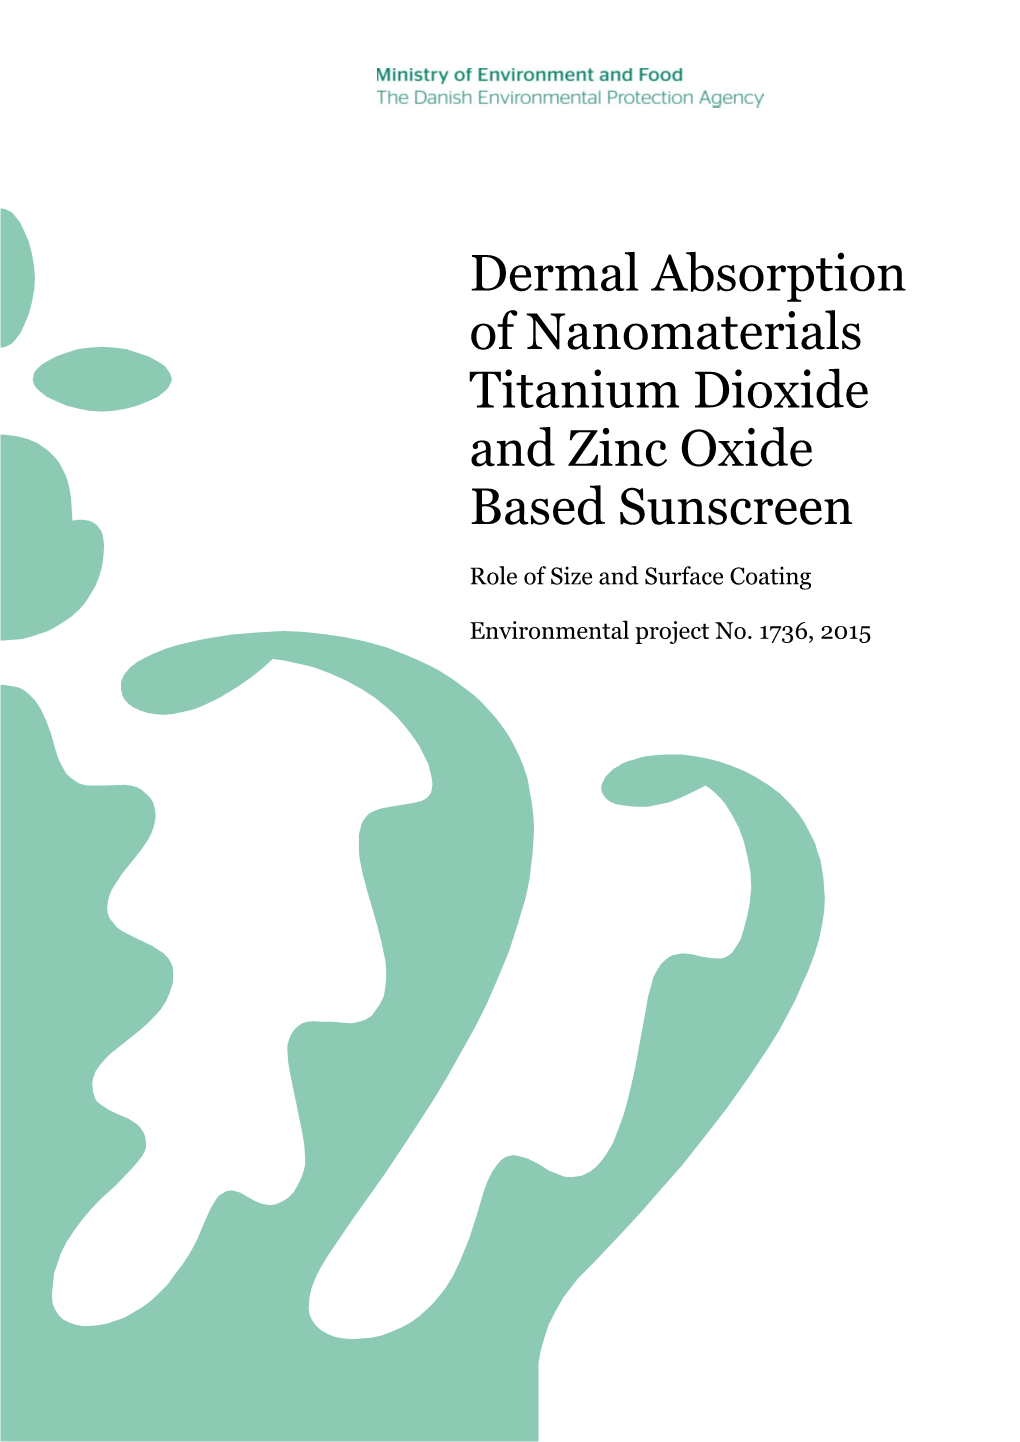 Dermal Absorption of Nanomaterials Titanium Dioxide and Zinc Oxide Based Sunscreen